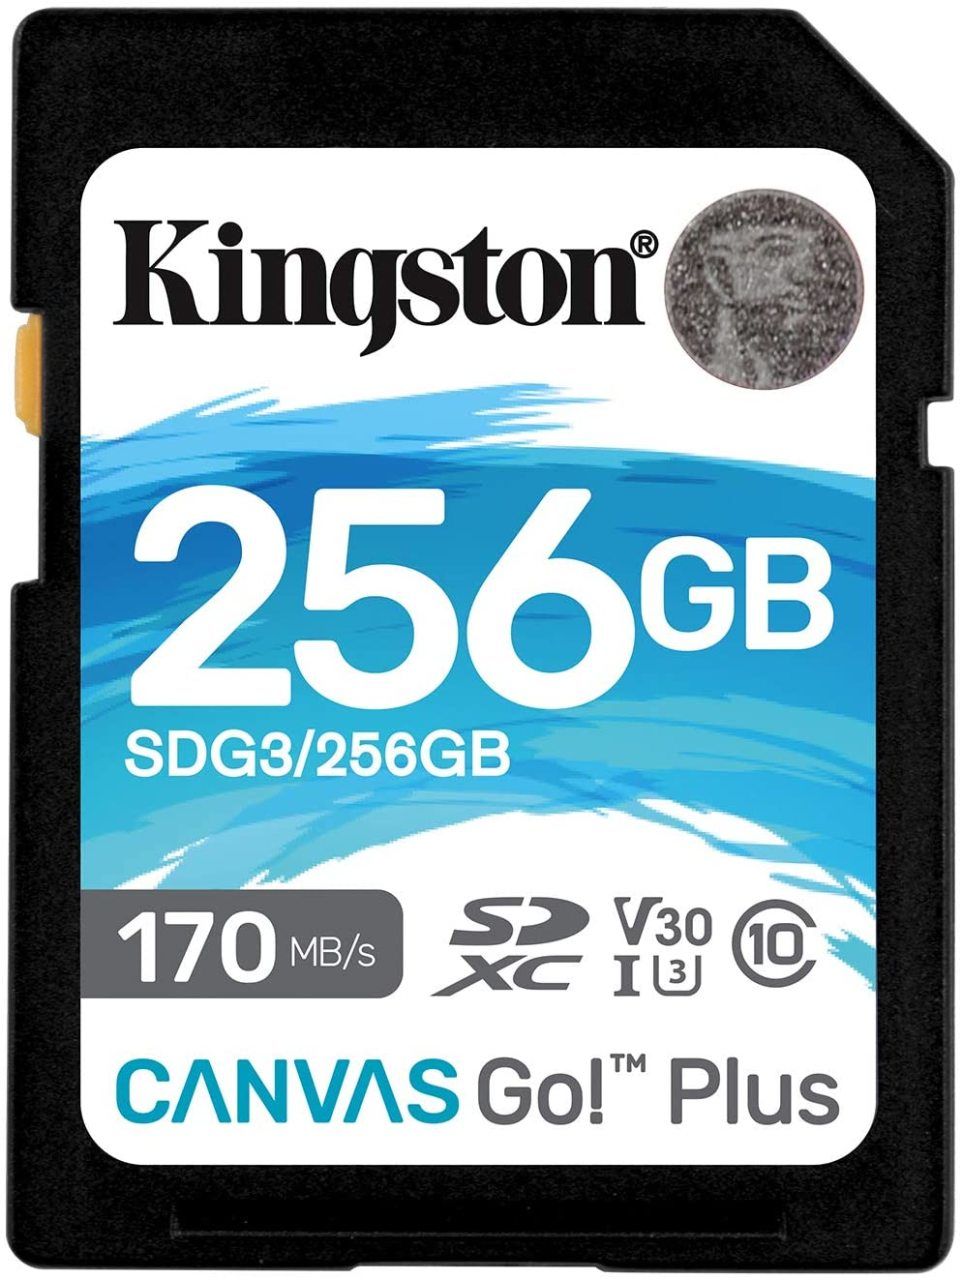 KINGSTON 256GB SDXC CANVAS GO PLUS 170R C10 UHS-I U3 V30   SD CARD SDG3/256GB